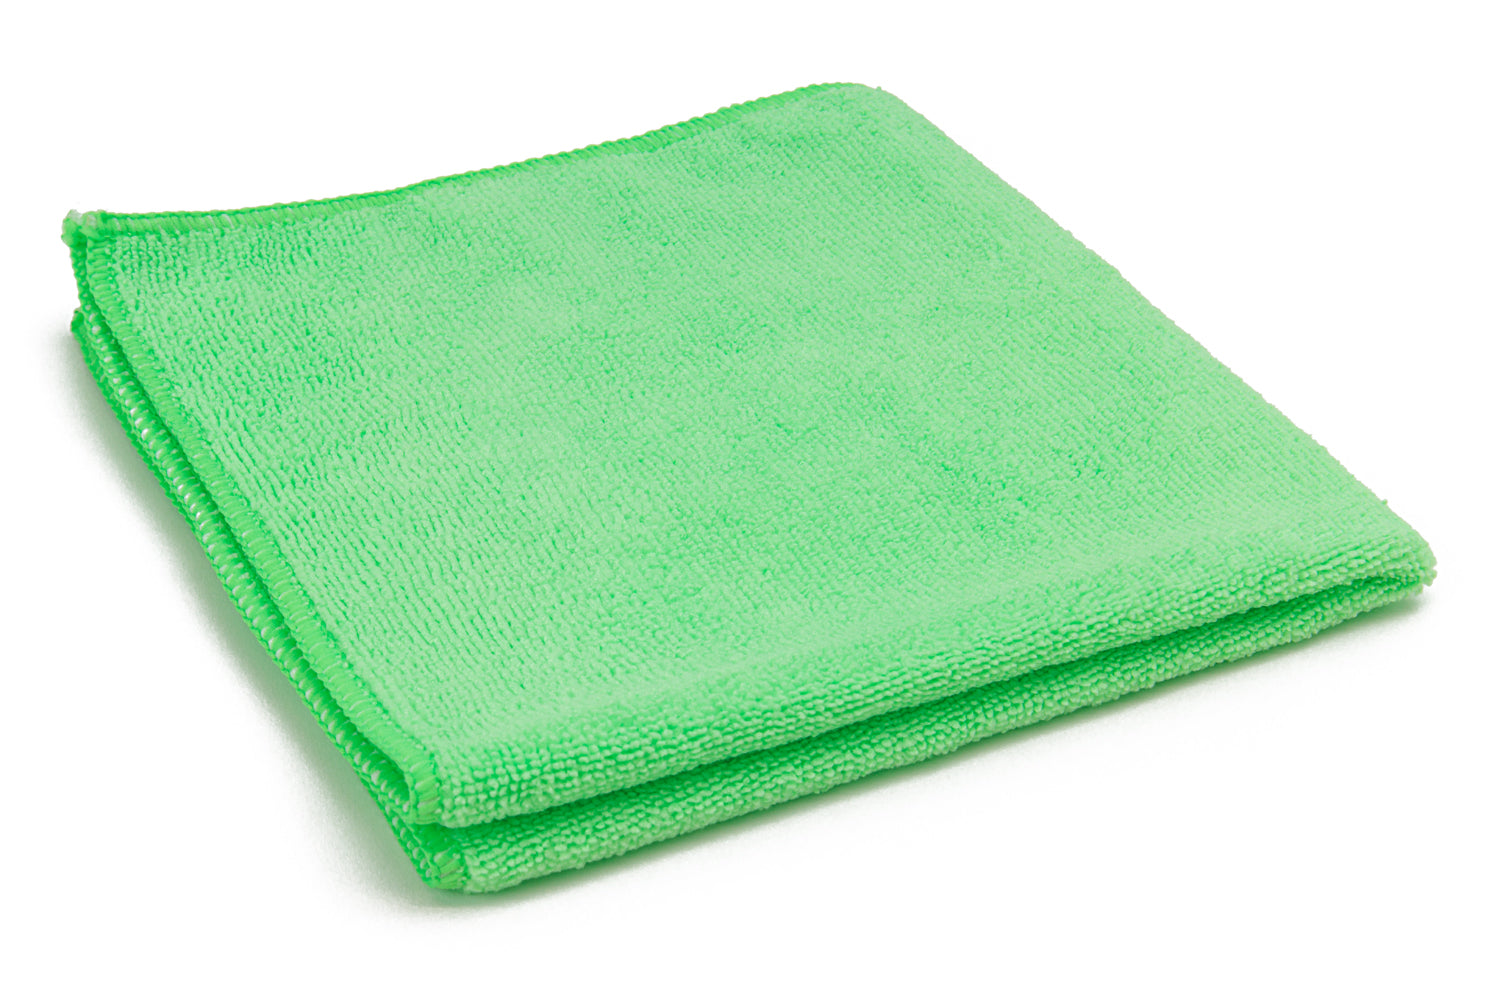 Autofiber Towel [Utility 350S] All Purpose Microfiber Towel 350gsm 16"x16" - 10 pack